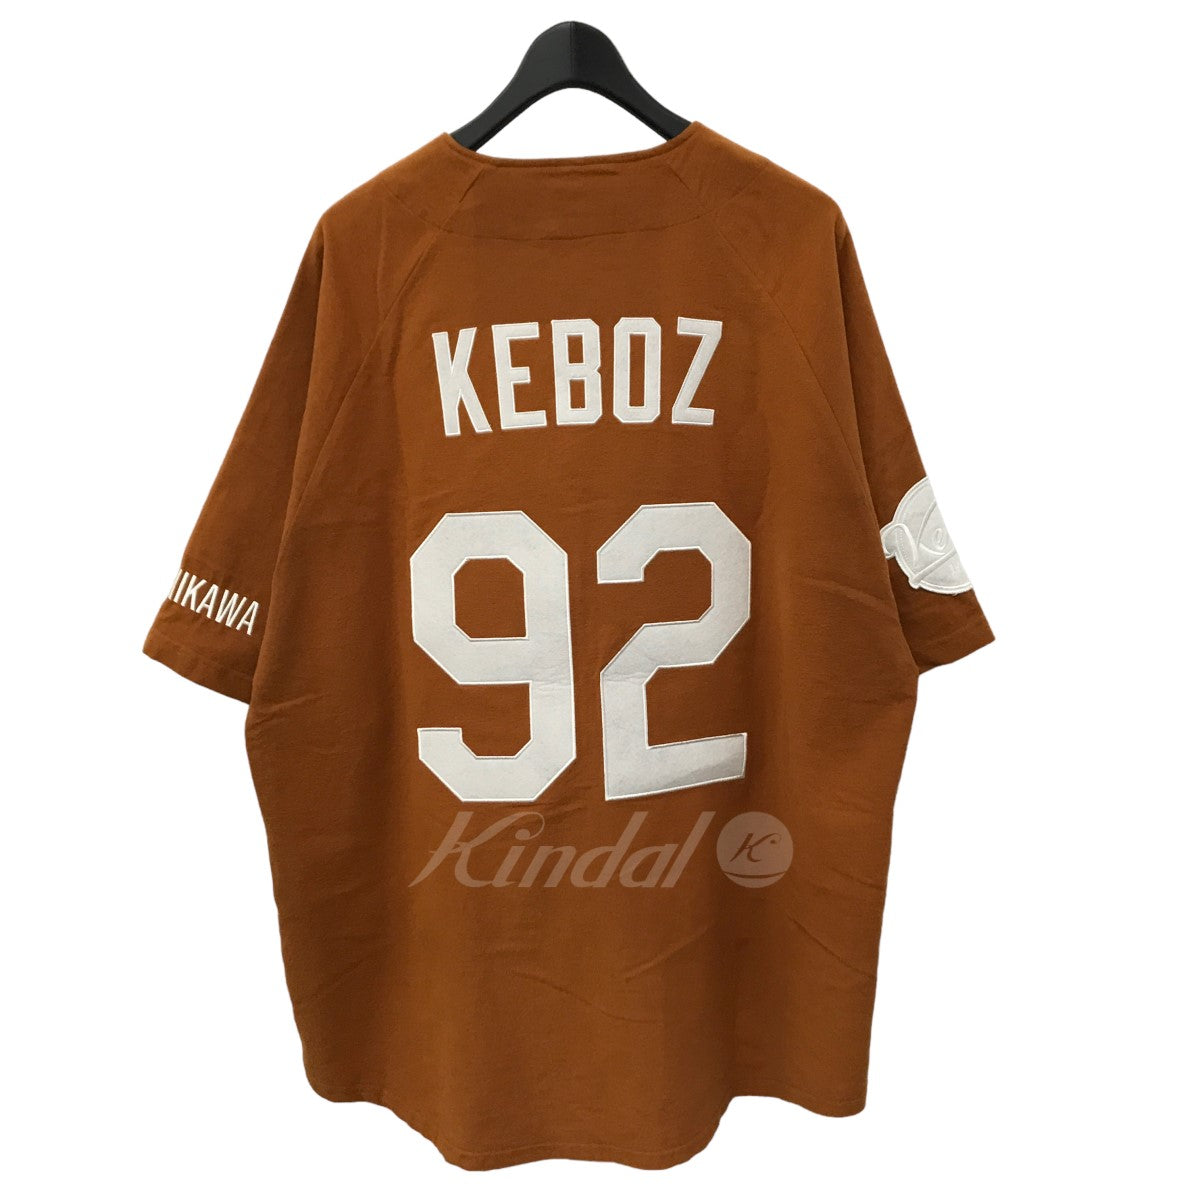 KEBOZ(ケボズ) FLANNEL BASEBALL SHIRT フランネル ベースボールシャツ 